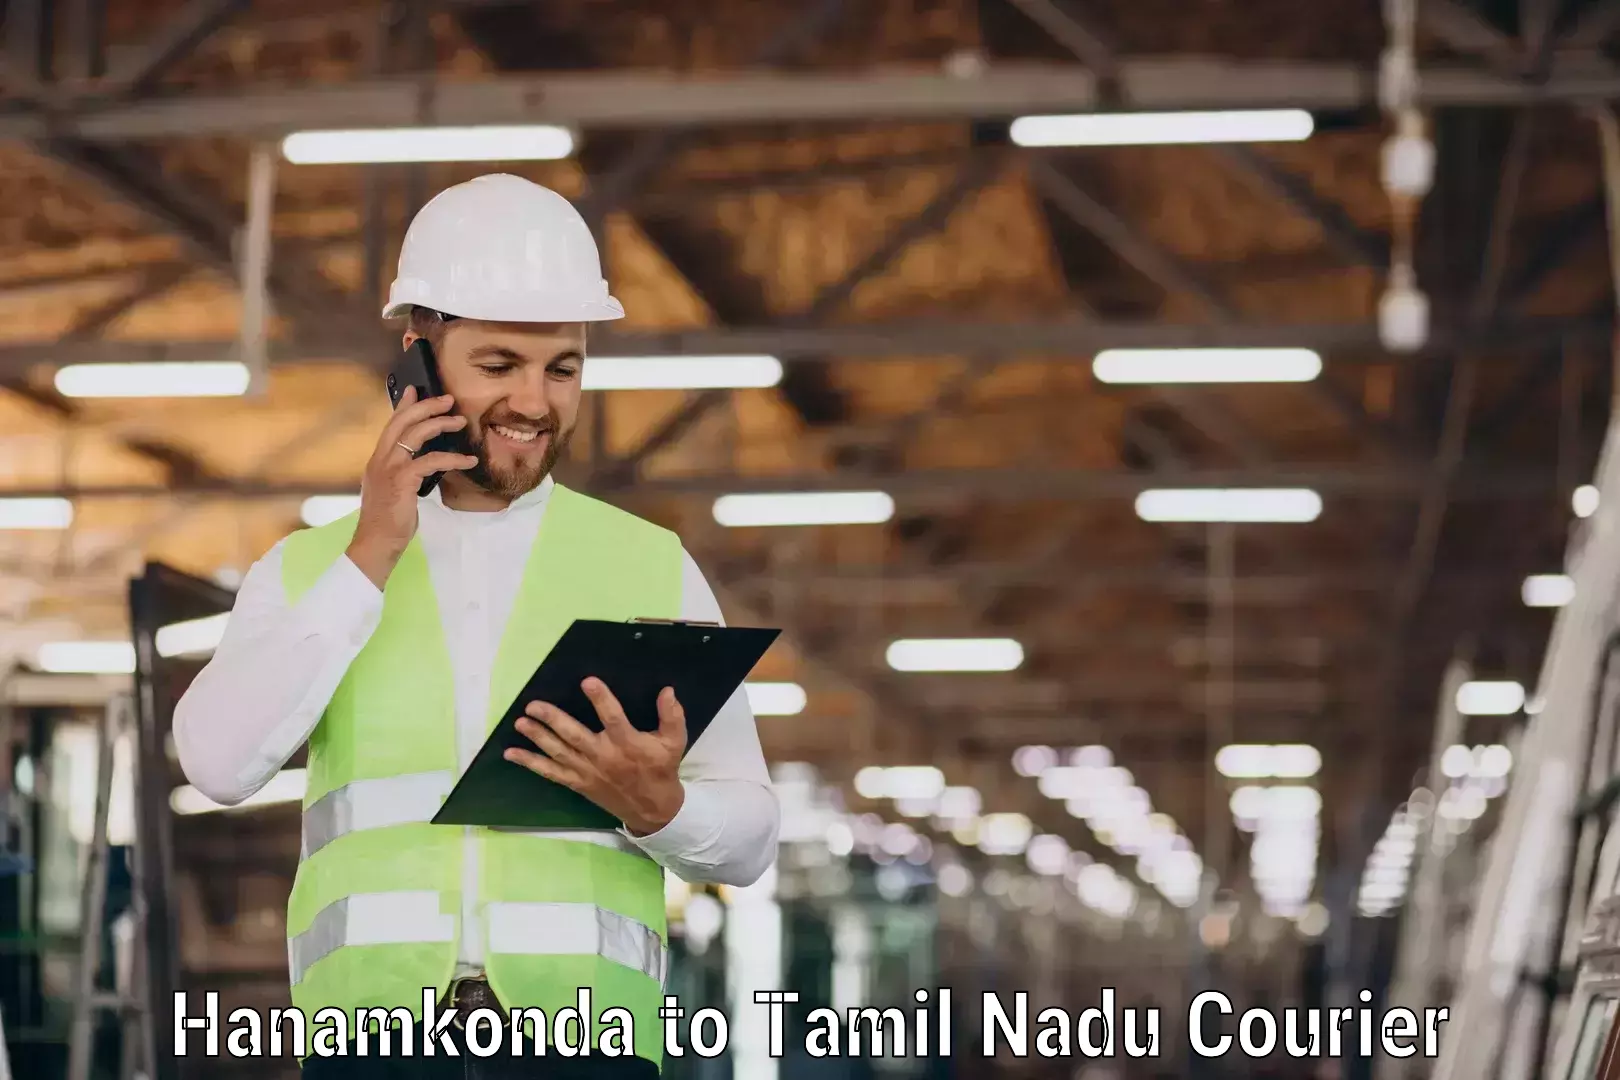 International courier networks Hanamkonda to Tirukalukundram